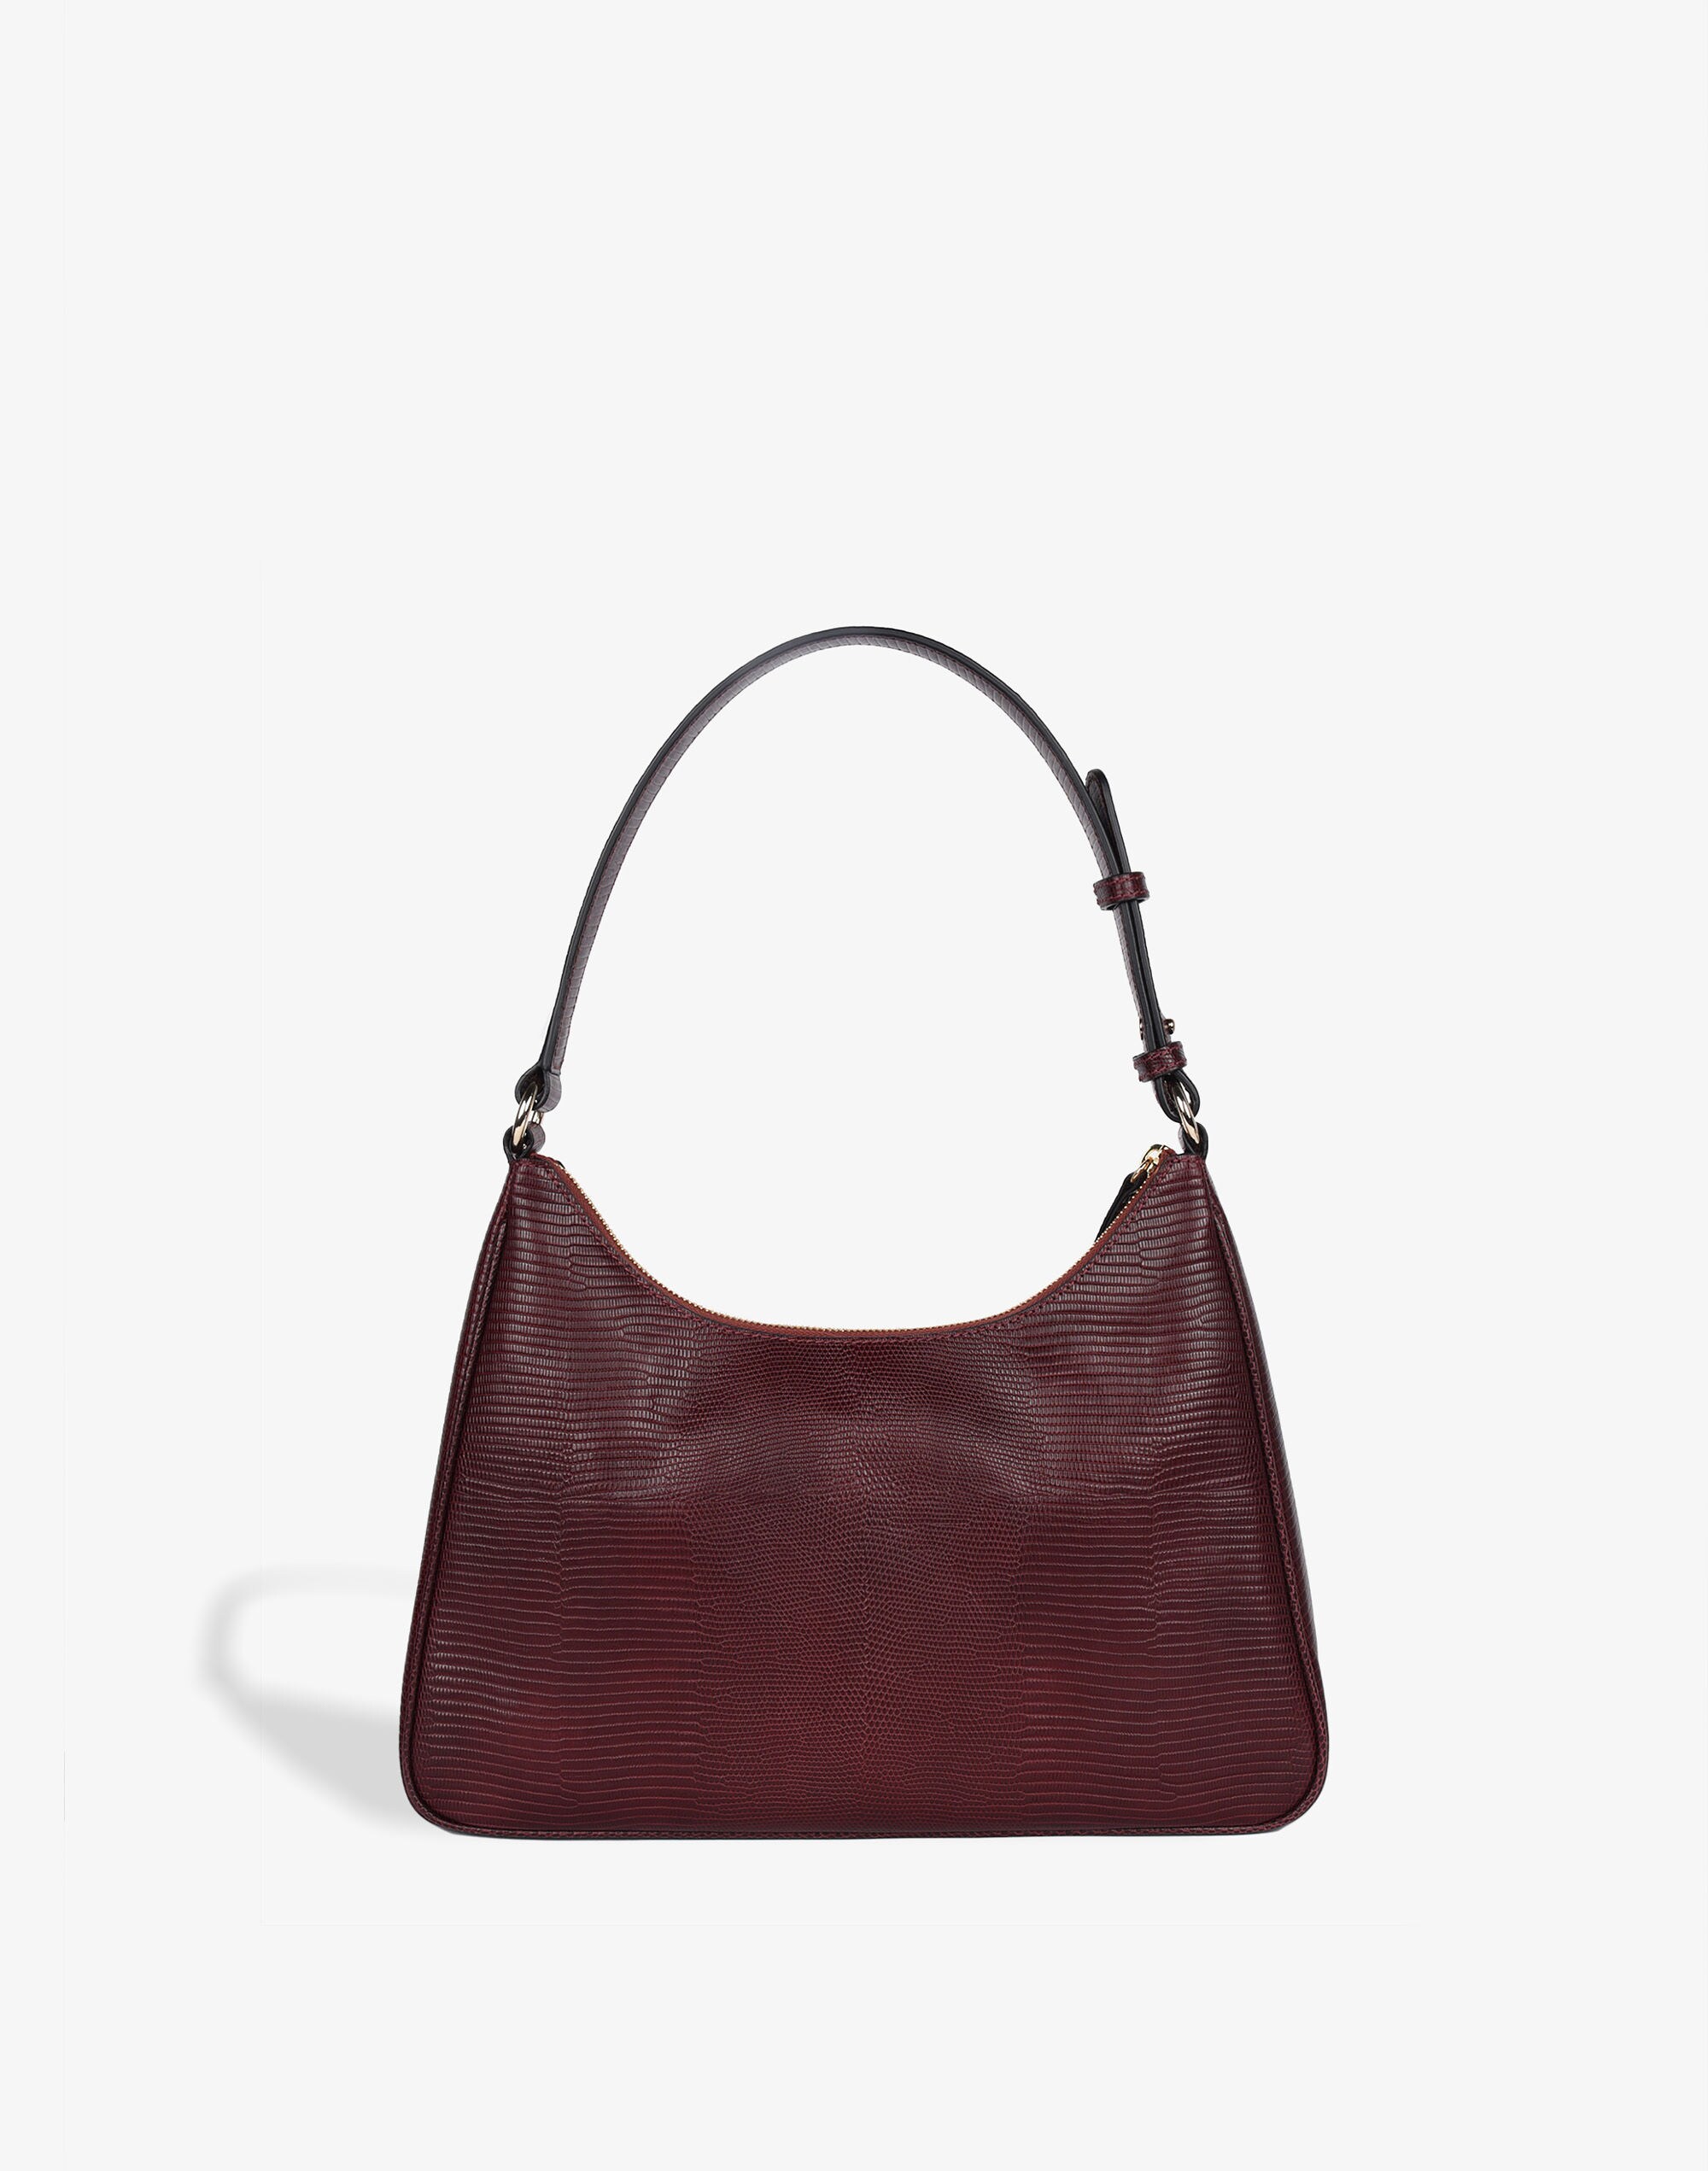 Women's Bags, Innovative Designs